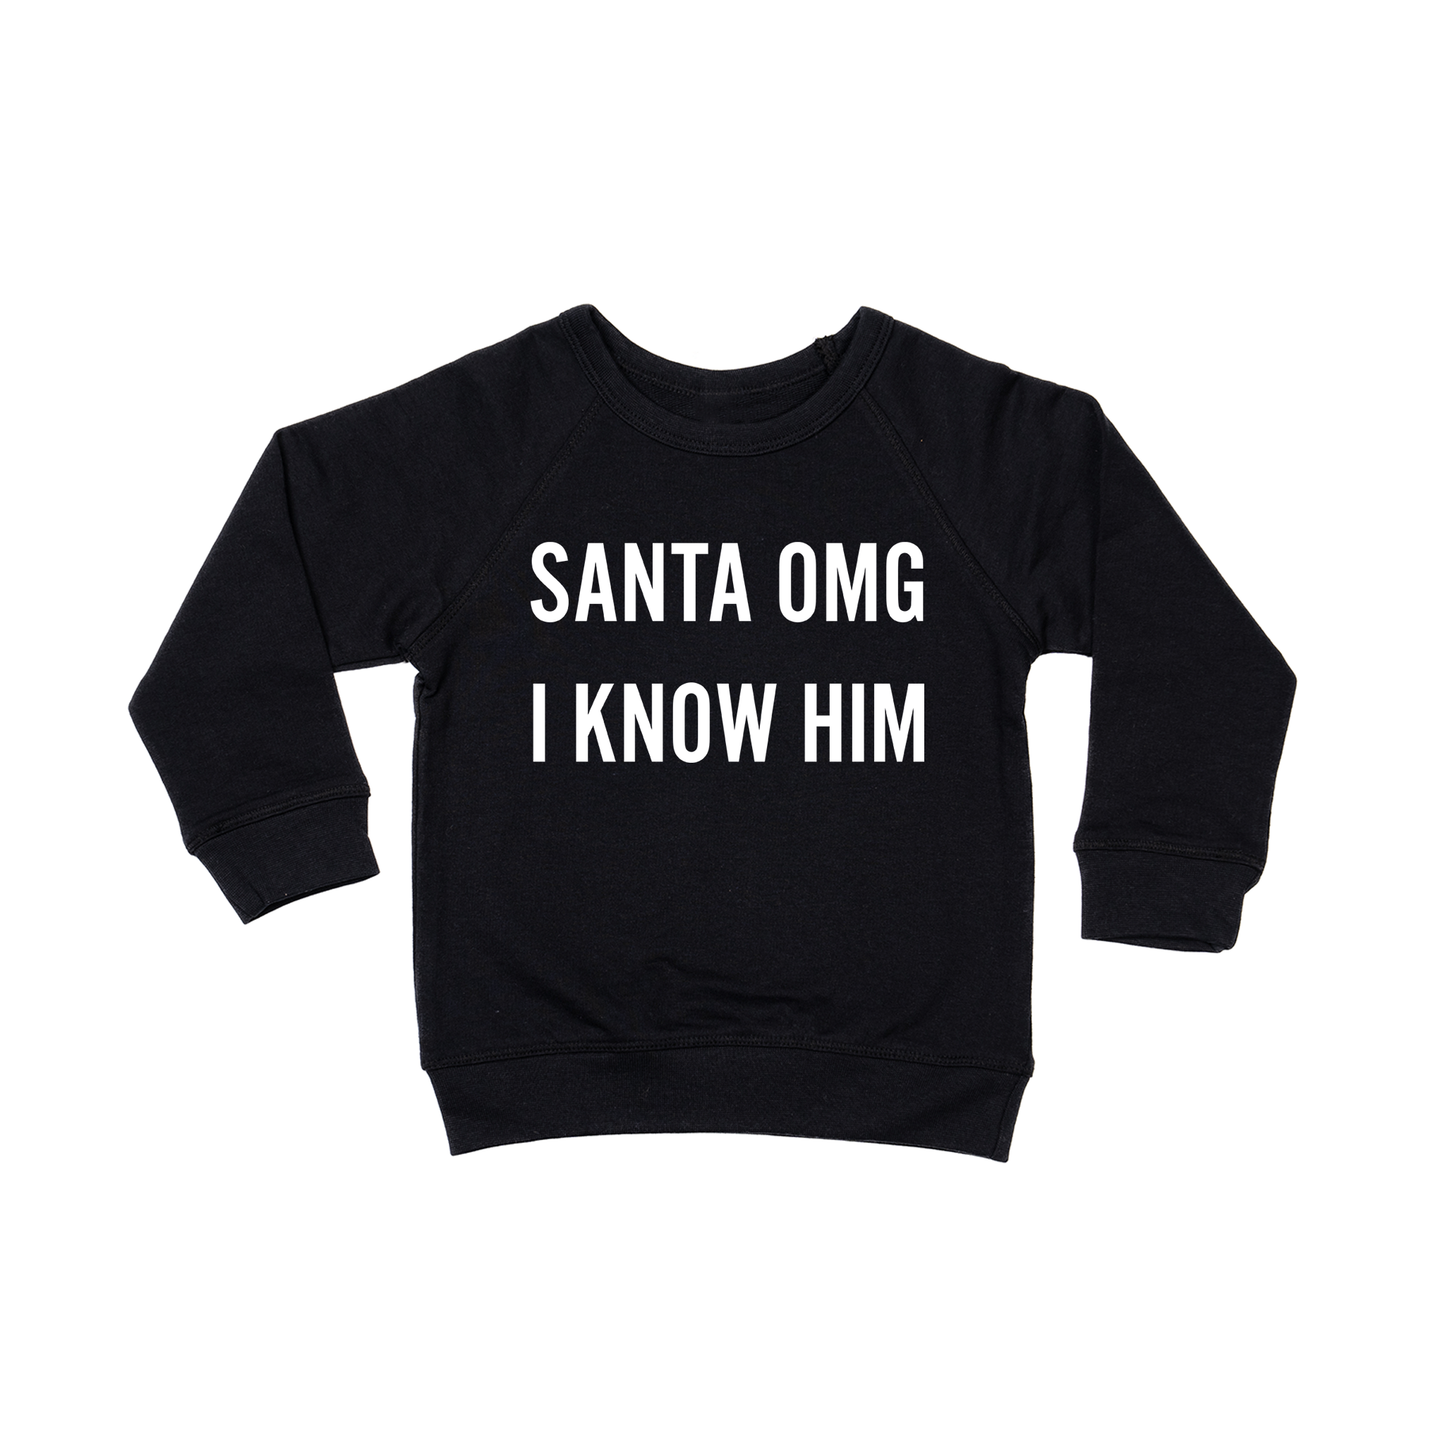 Santa OMG I Know Him (White) - Kids Sweatshirt (Black)